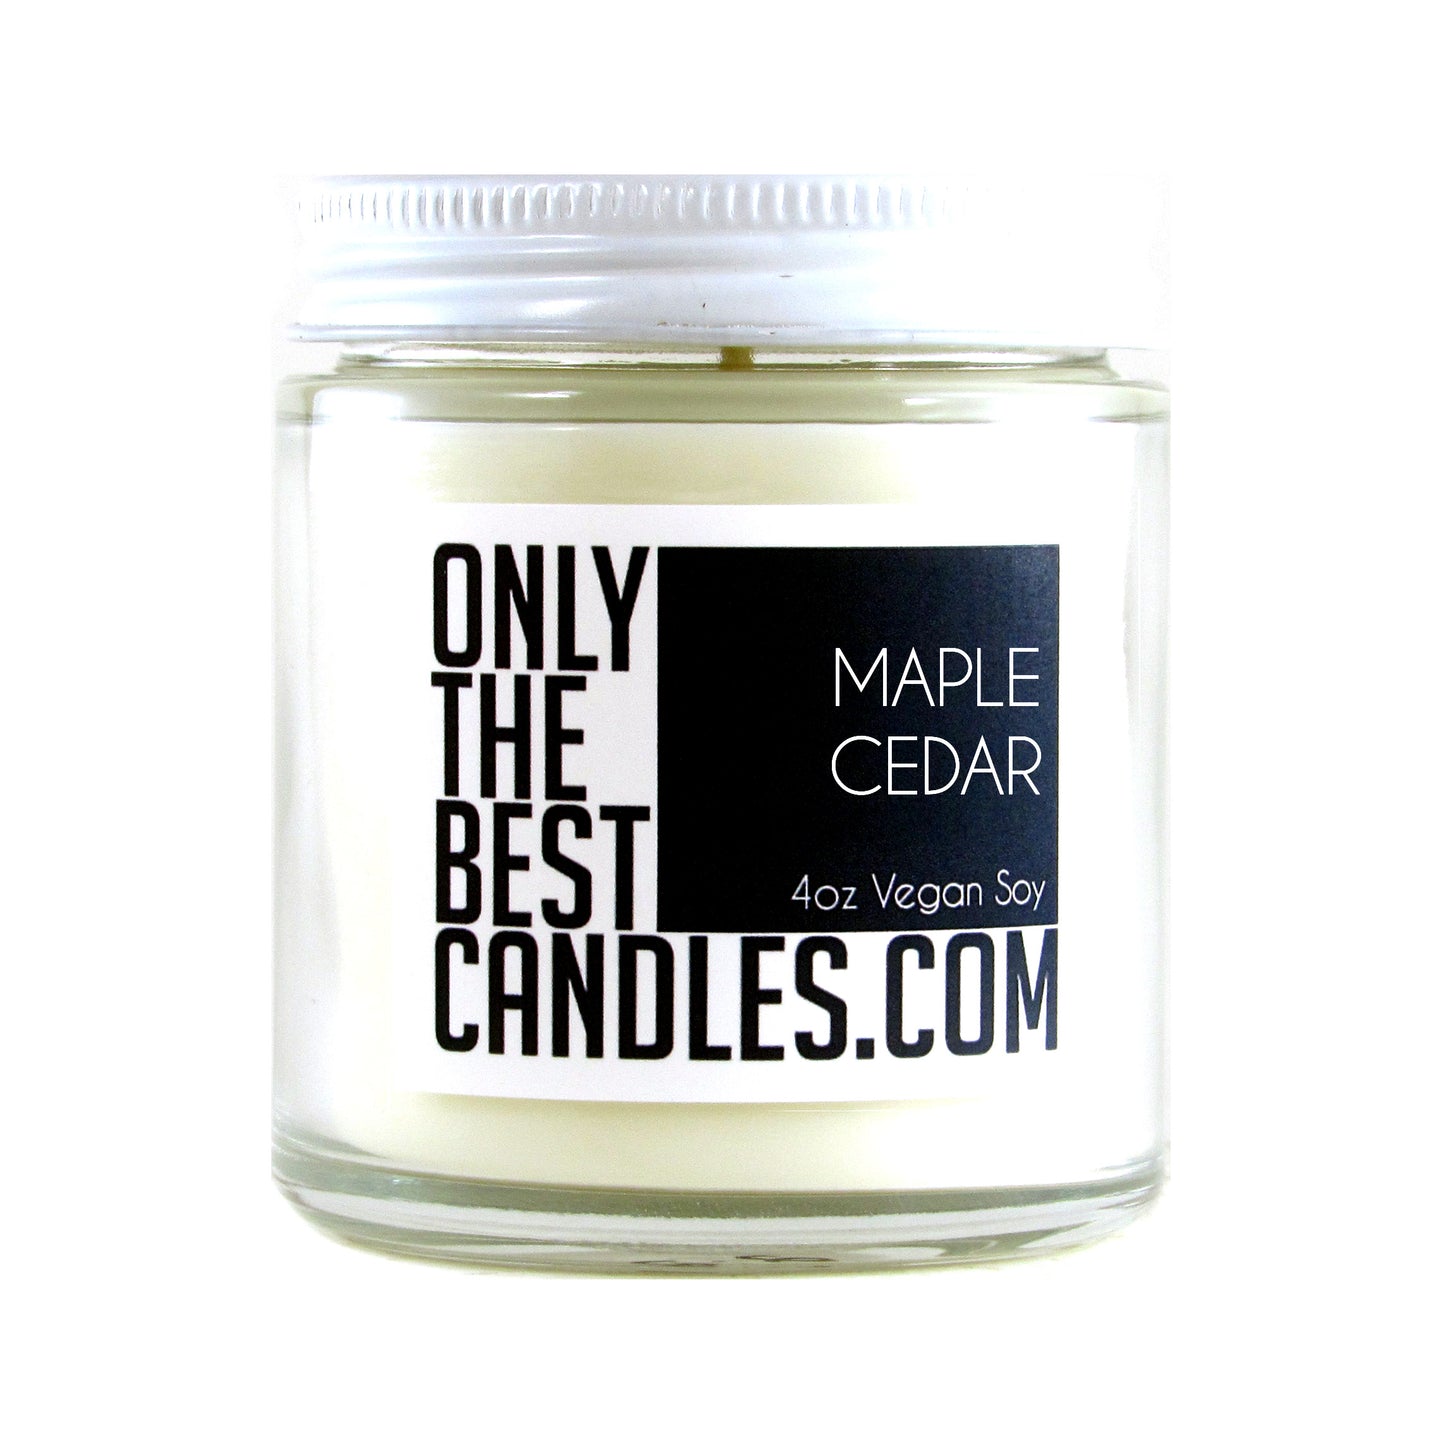 Maple Cedar 4oz Candle